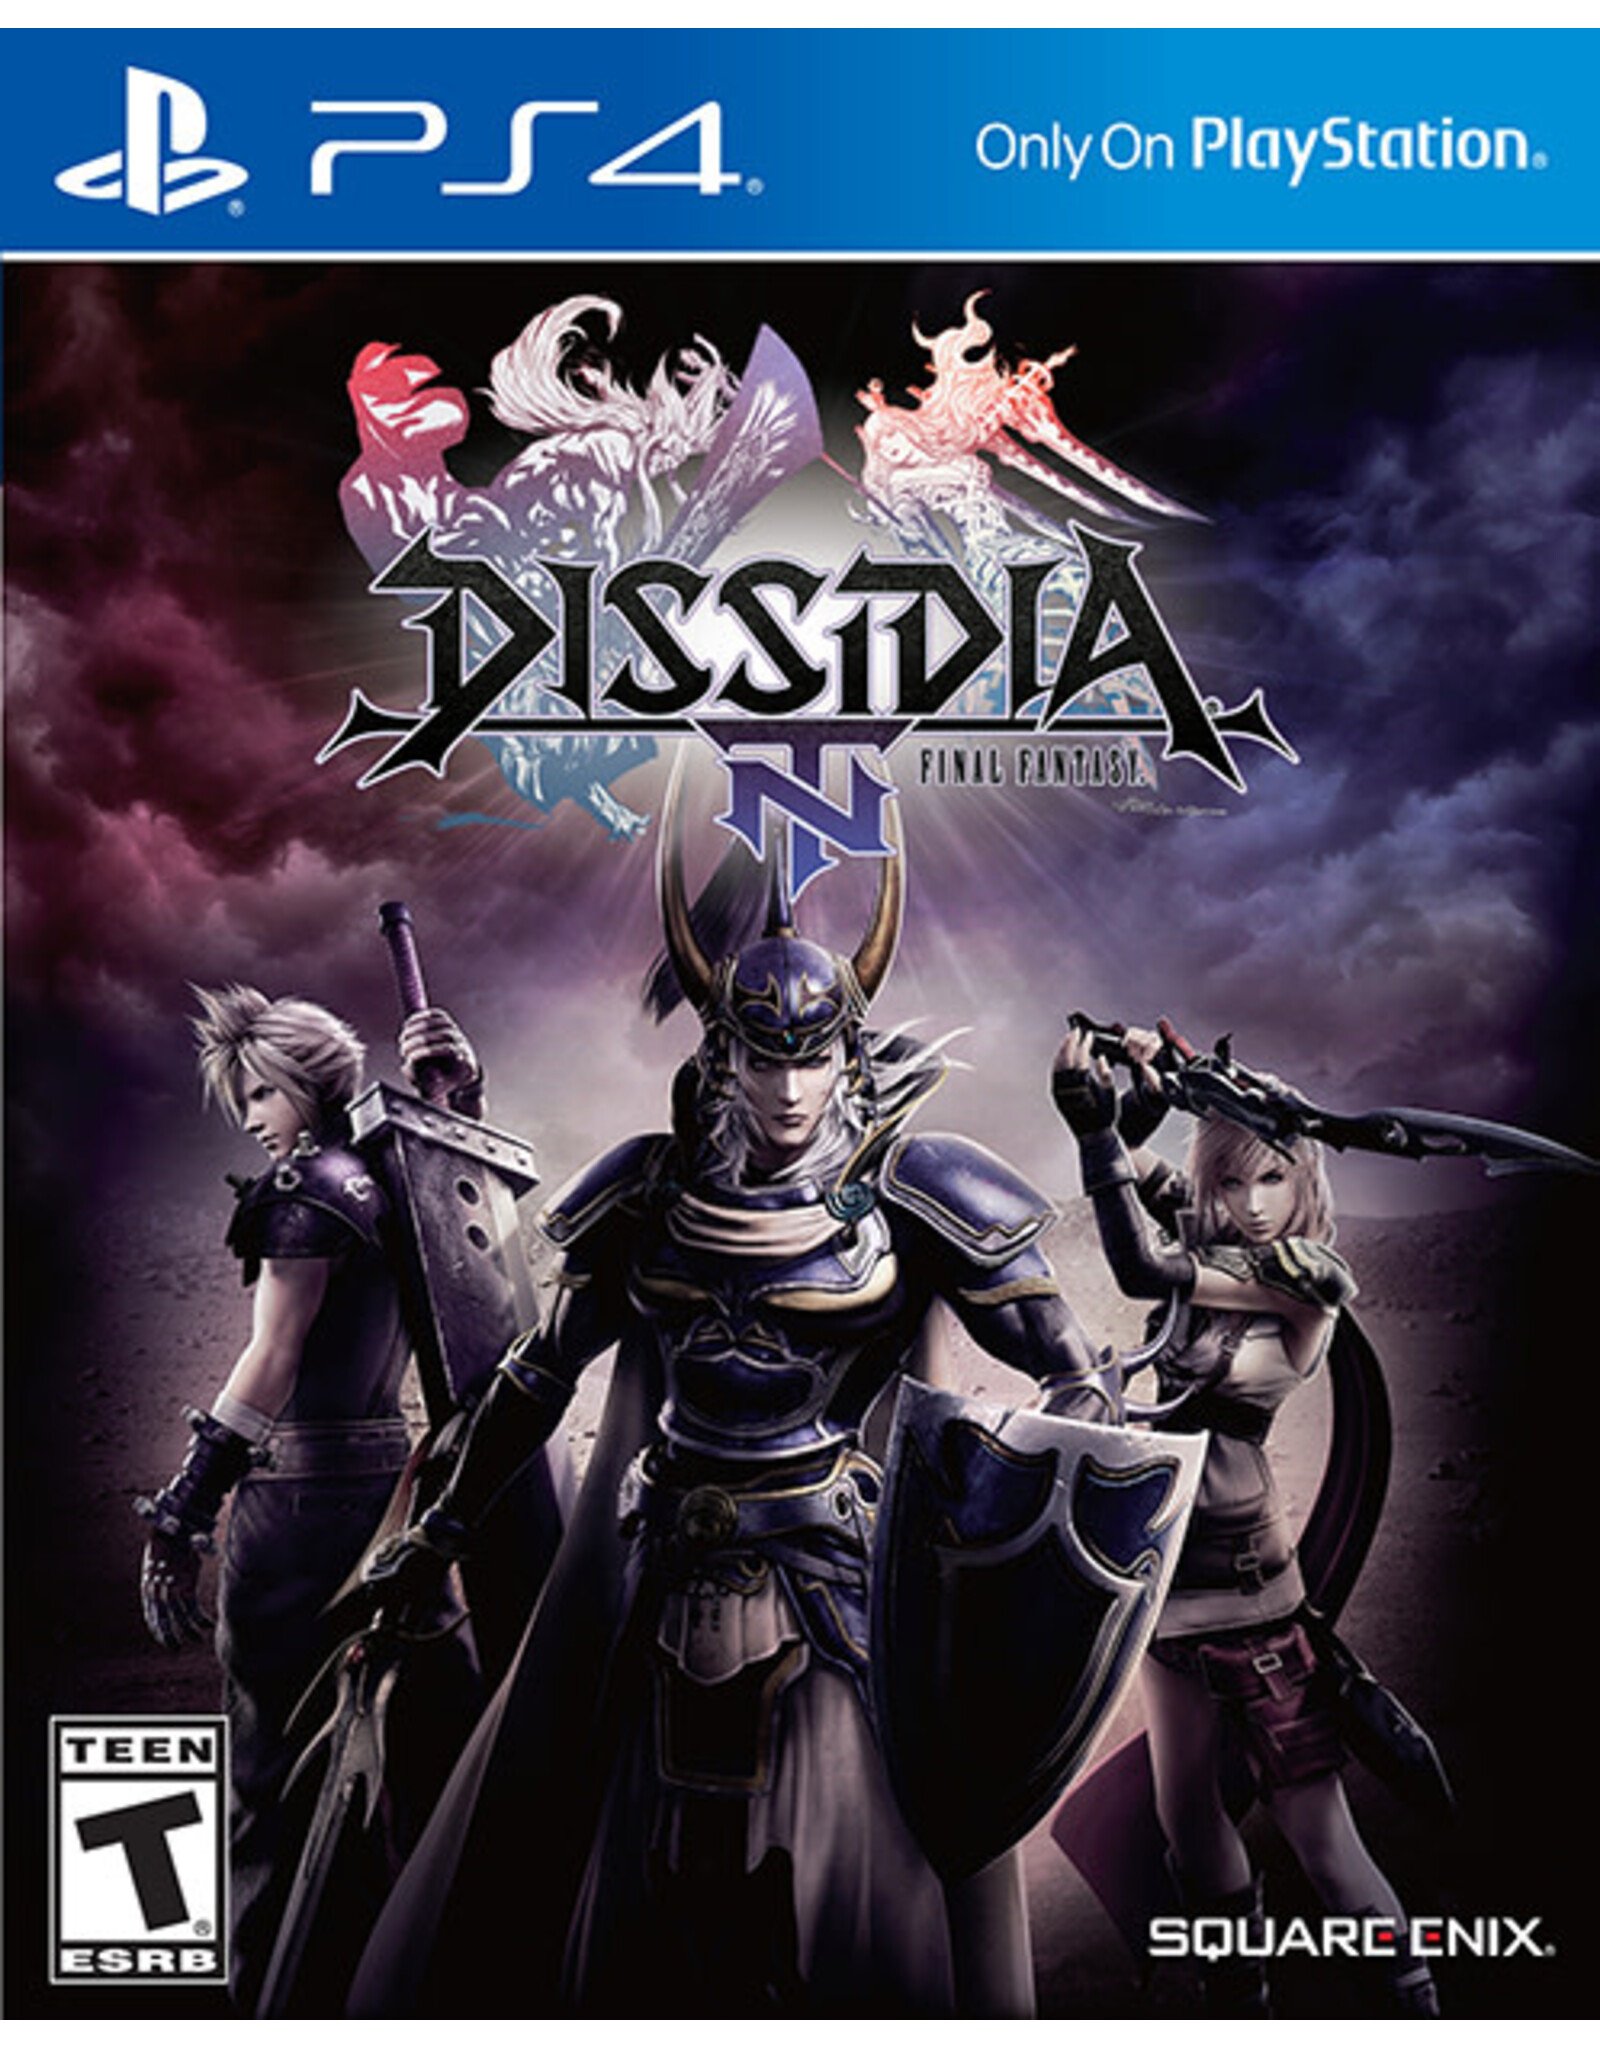 Playstation 4 Dissidia Final Fantasy NT (Used)